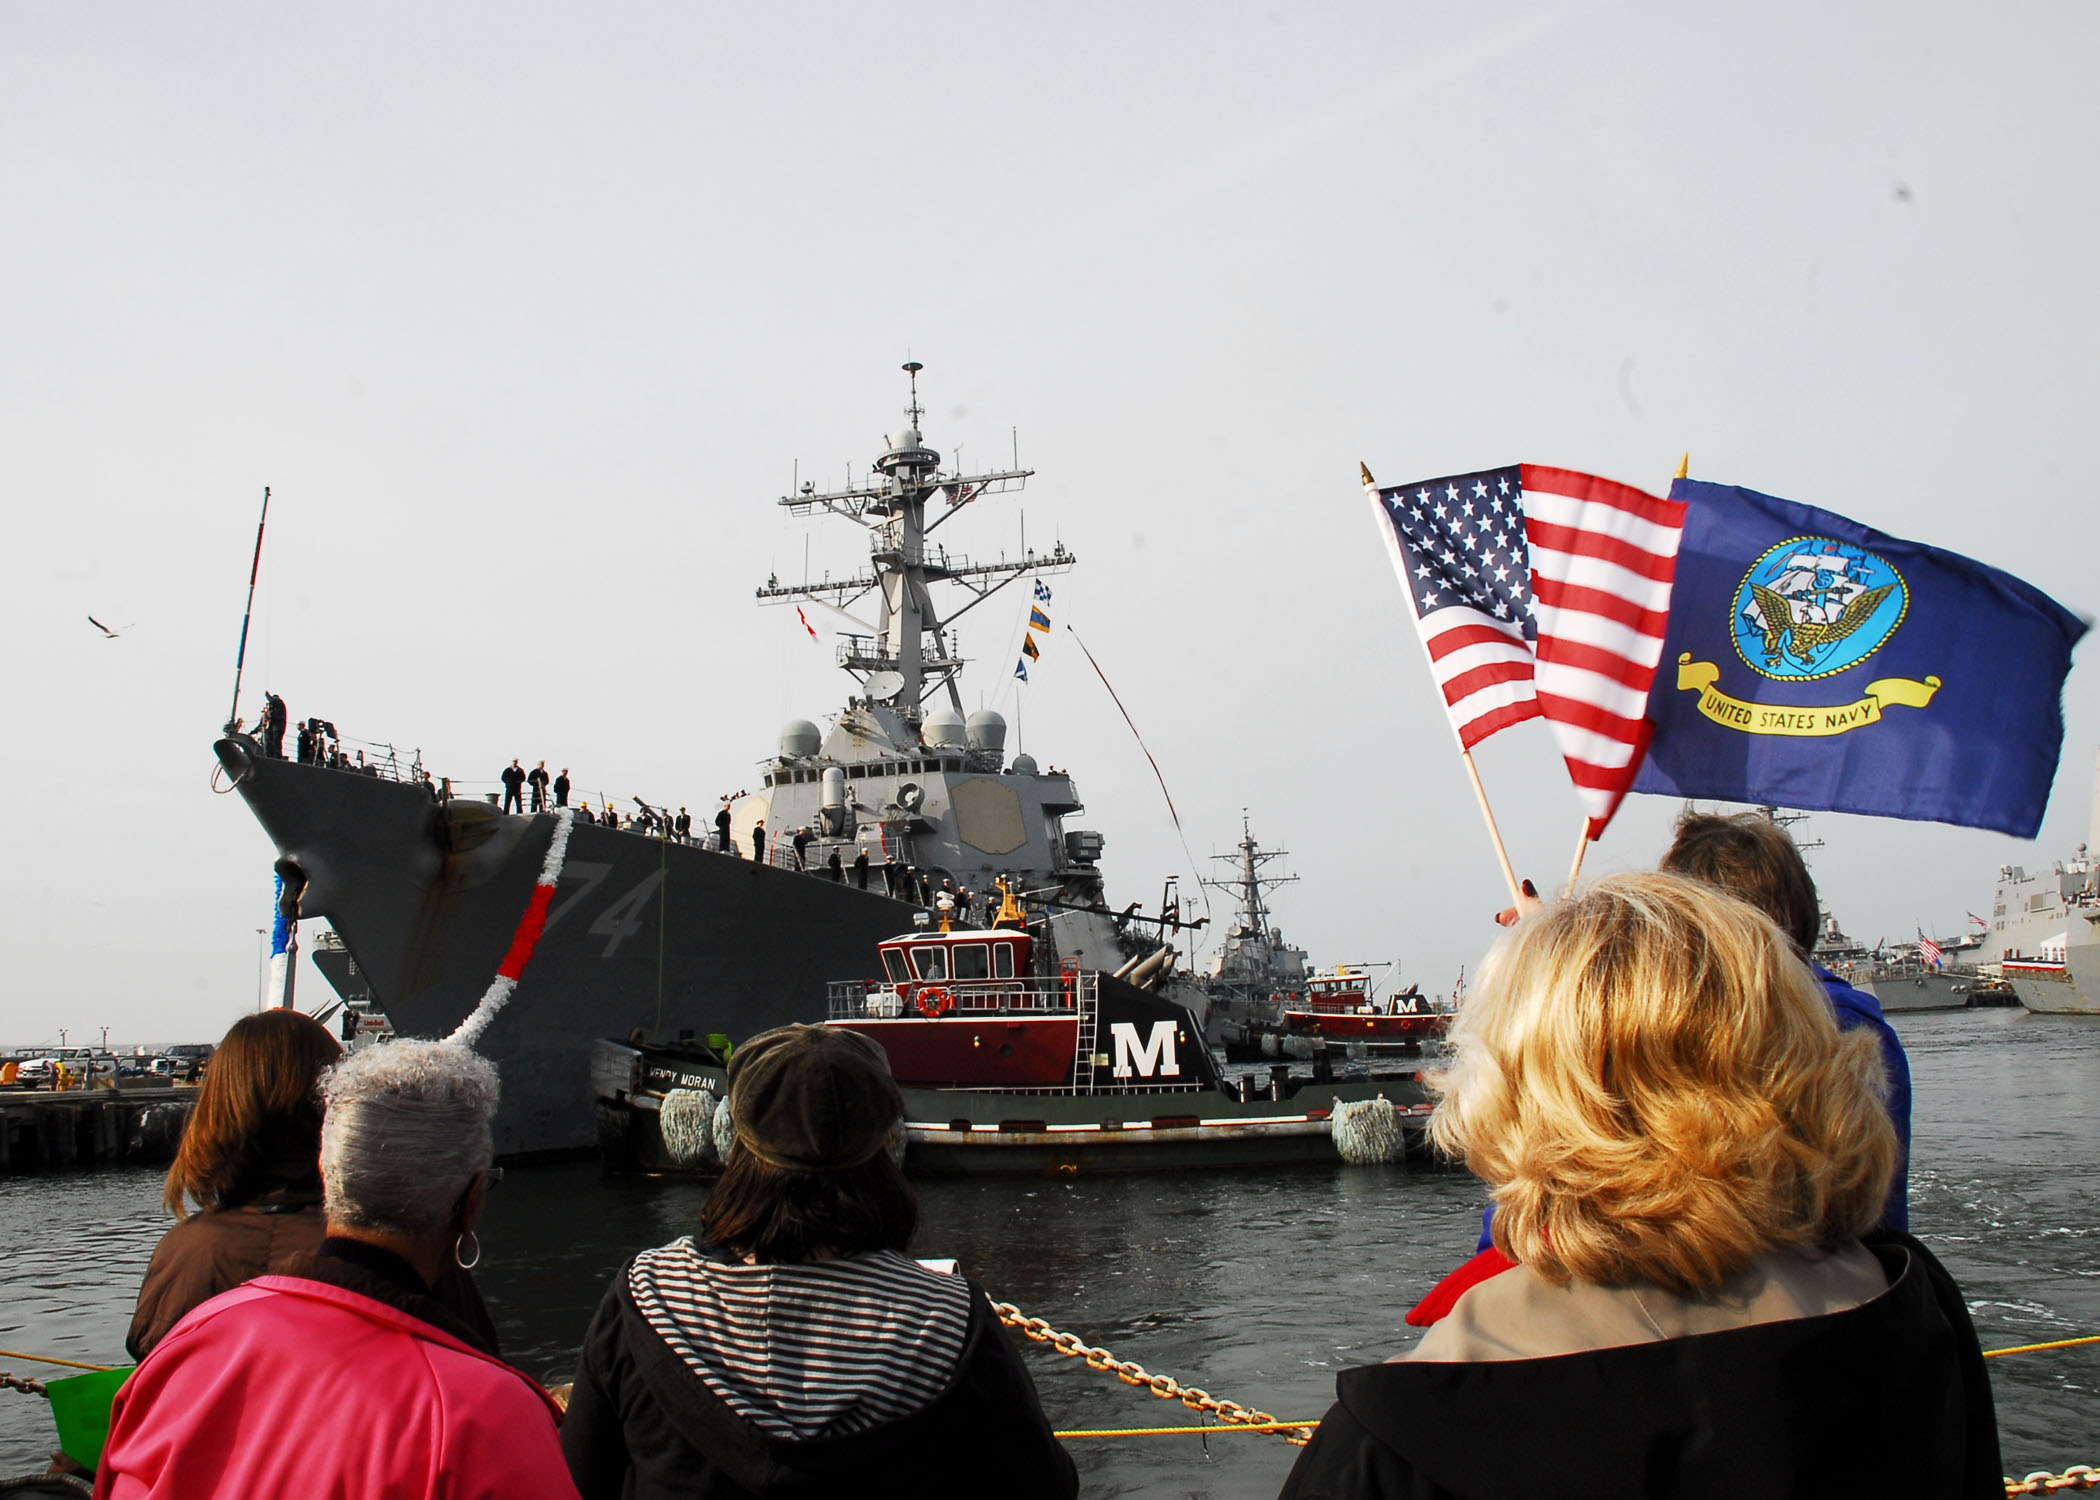 USS McFAUL DDG-74 02.12.2012  NorfolkBild: U.S. Navy